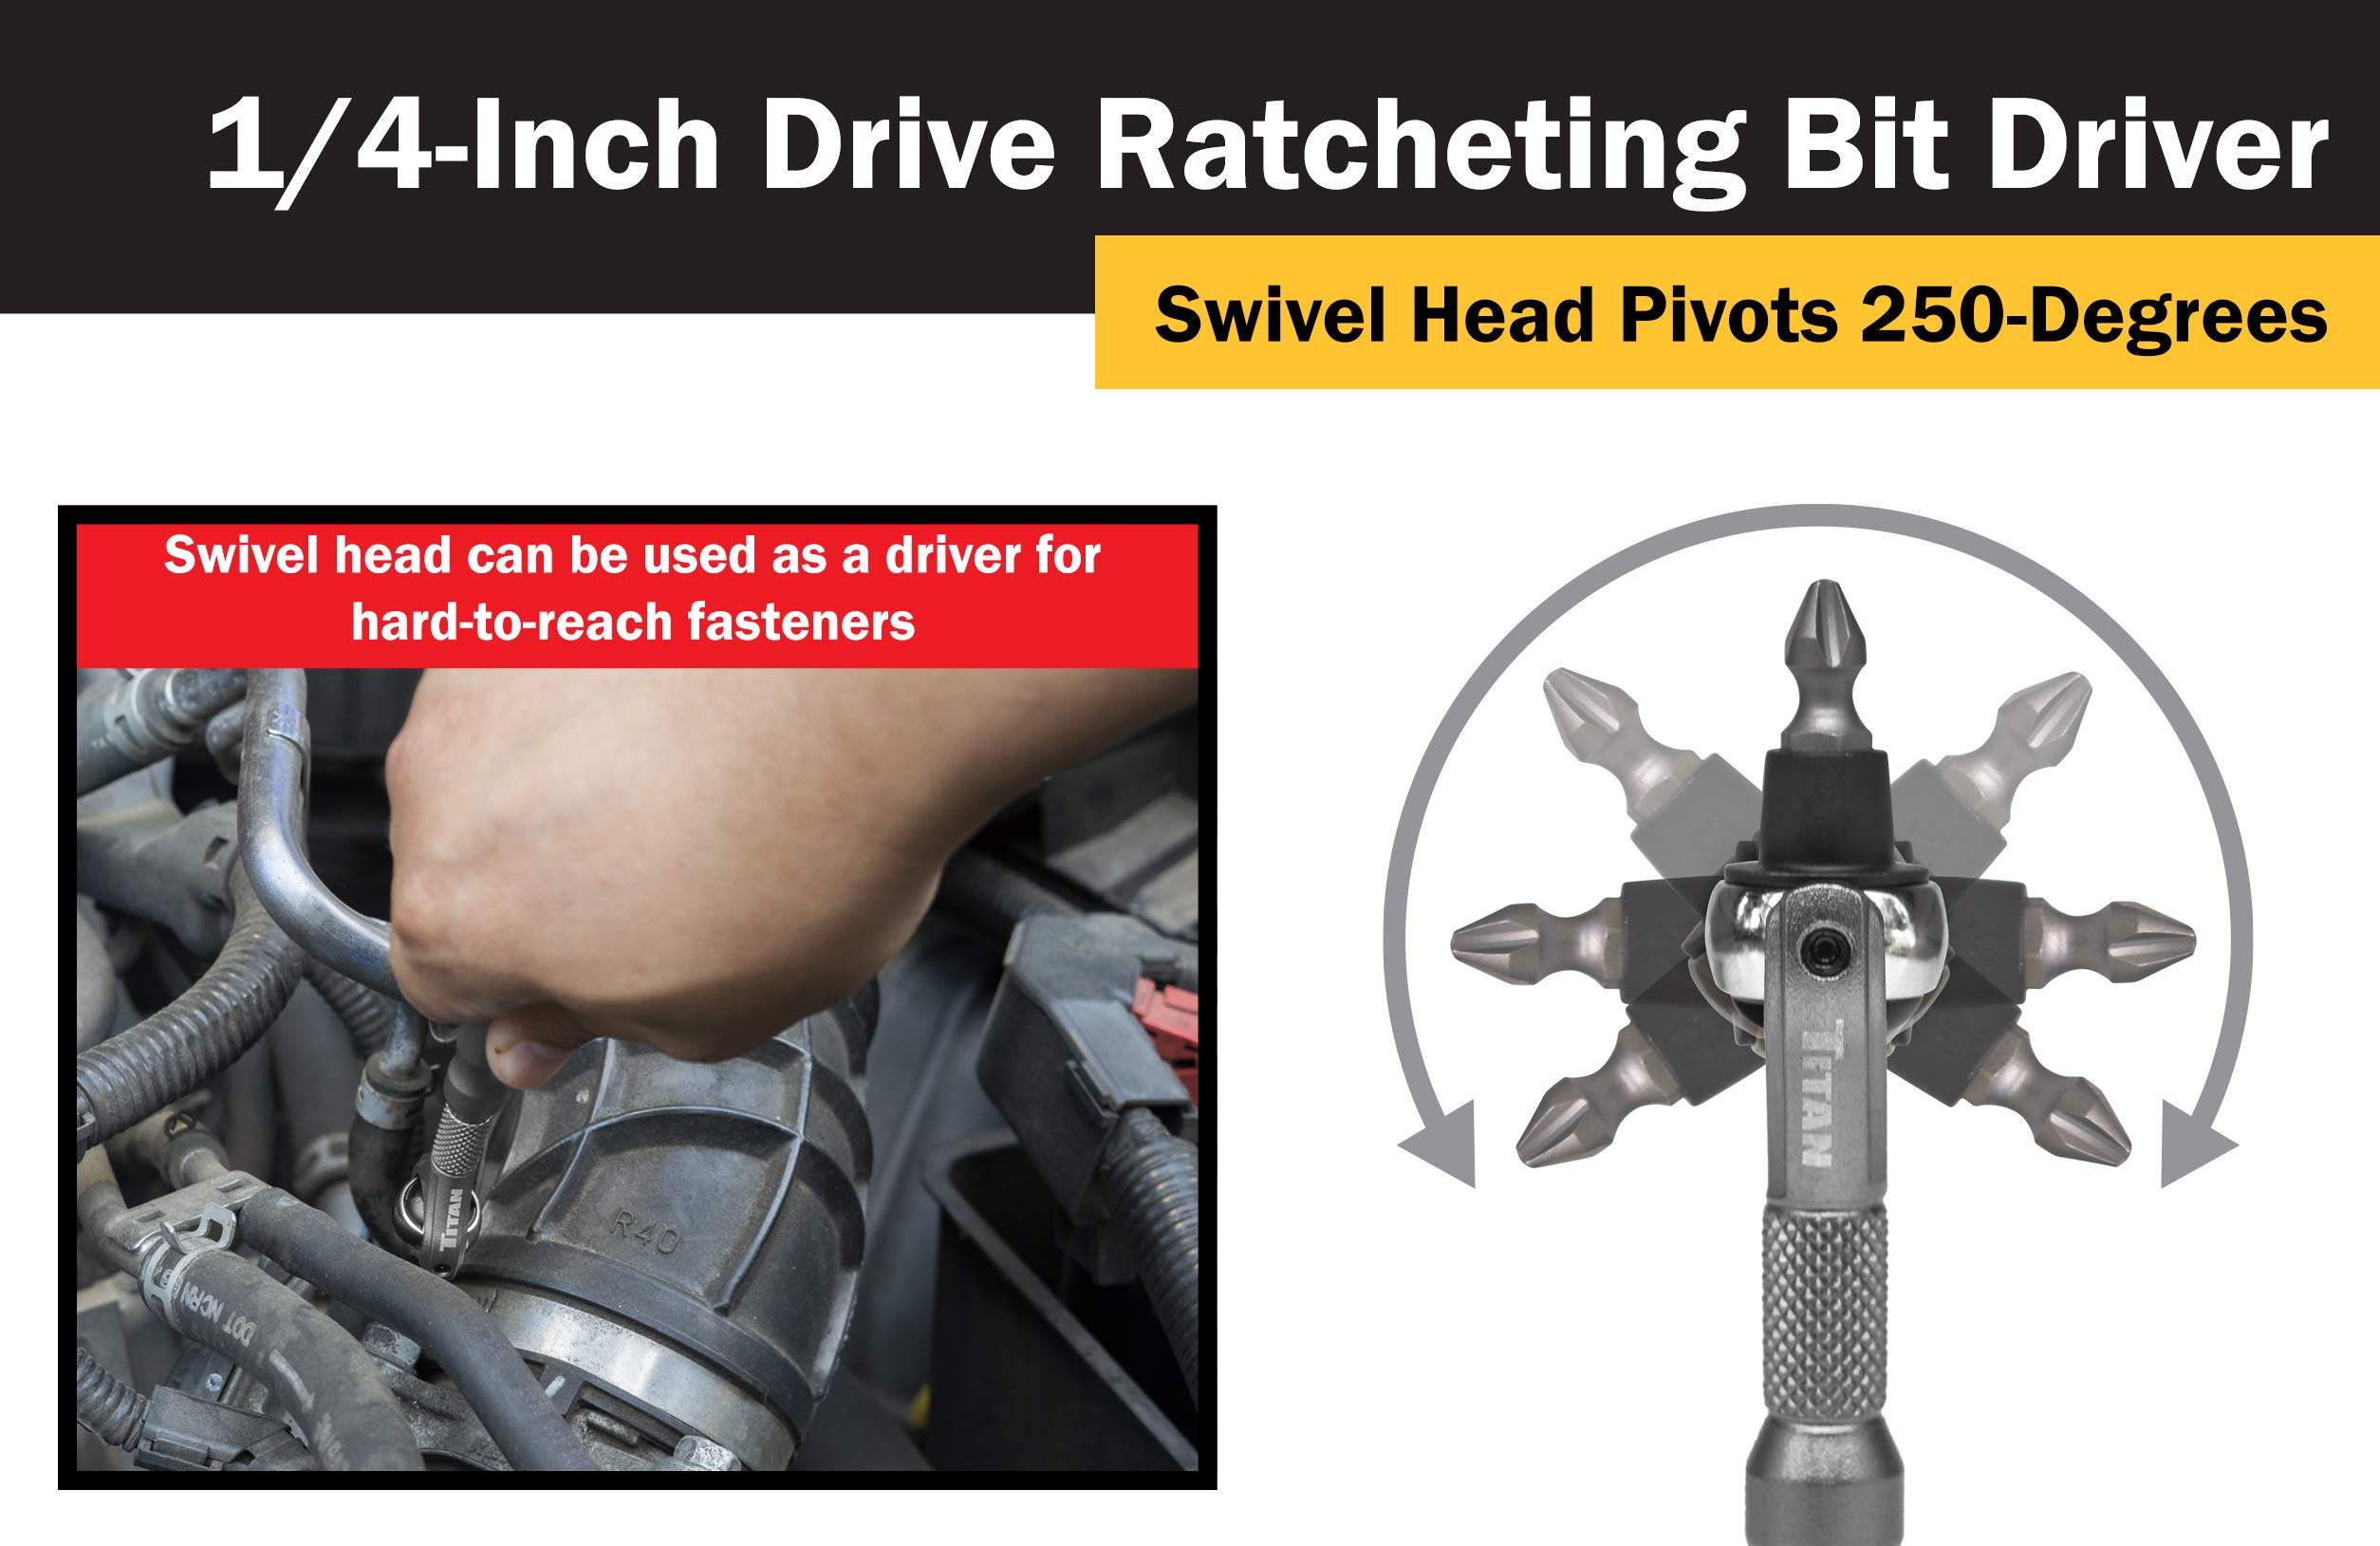 Titan 11318 1/4-Inch Drive x 4-Inch 90-Tooth Swivel Head Micro Ratcheting Bit Driver - Silver